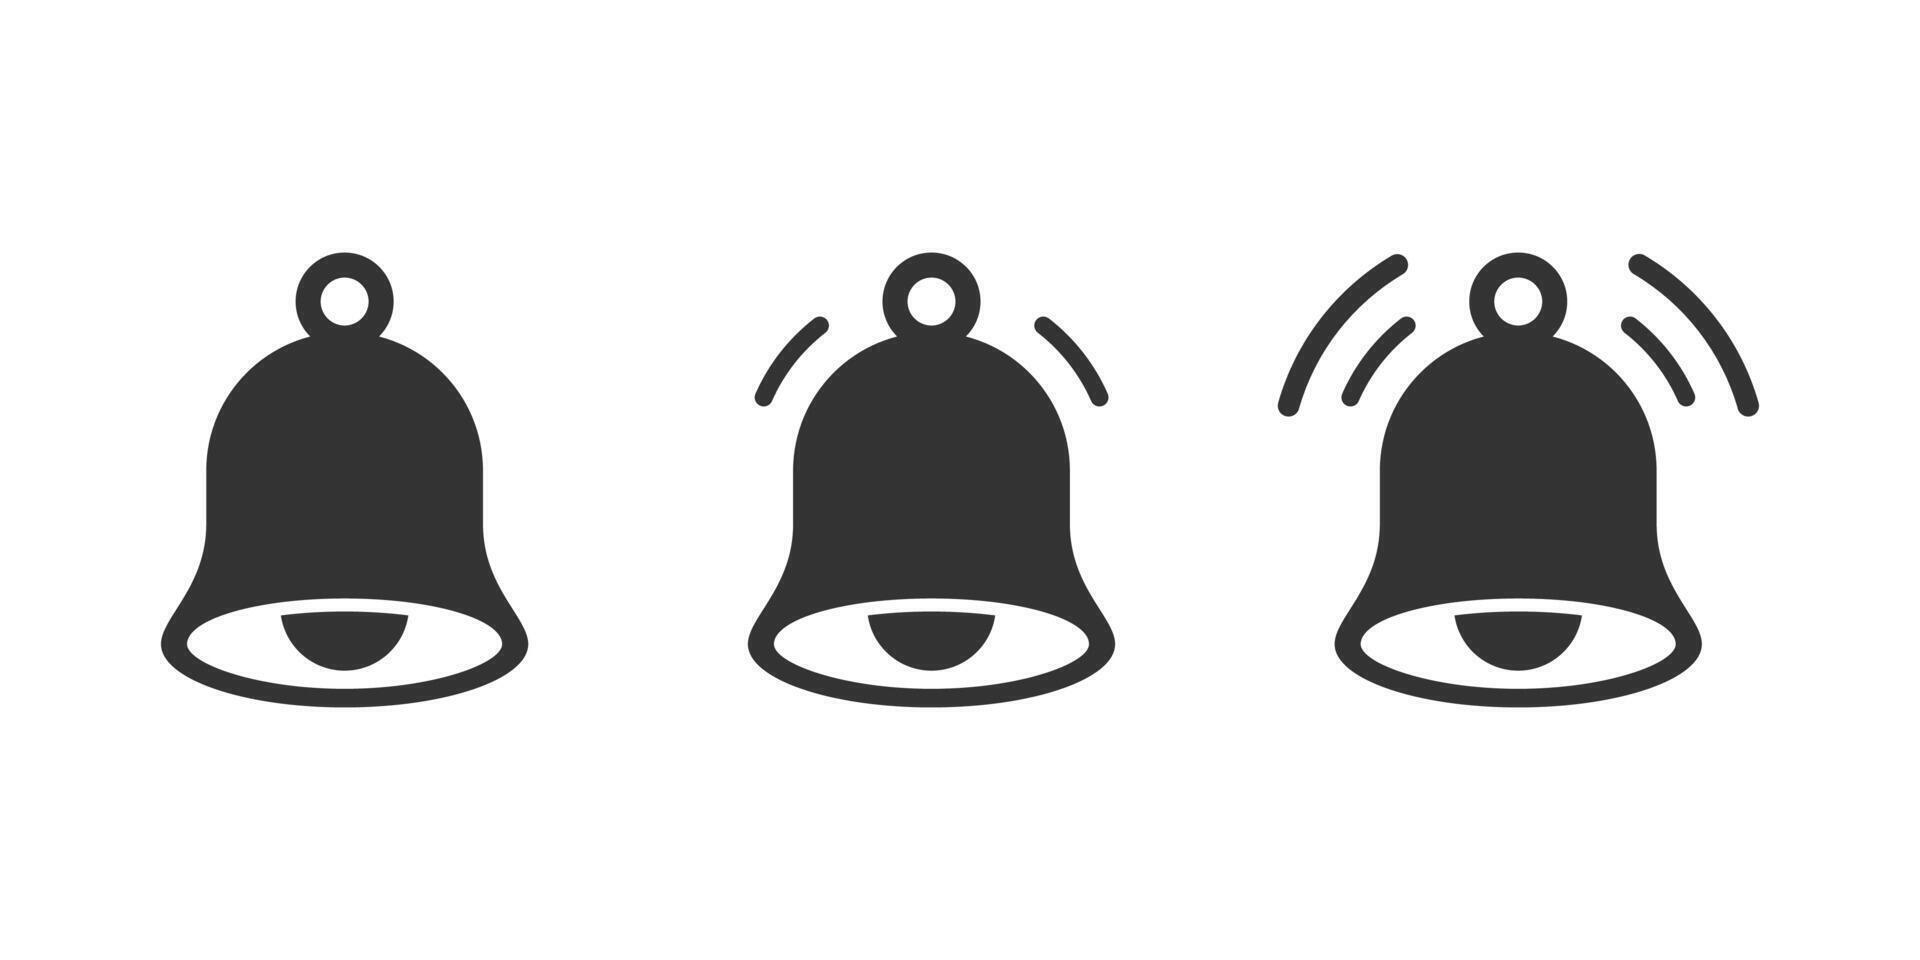 Notification bell icon set. Alarm symbols. Message bell icon. Vector illustration